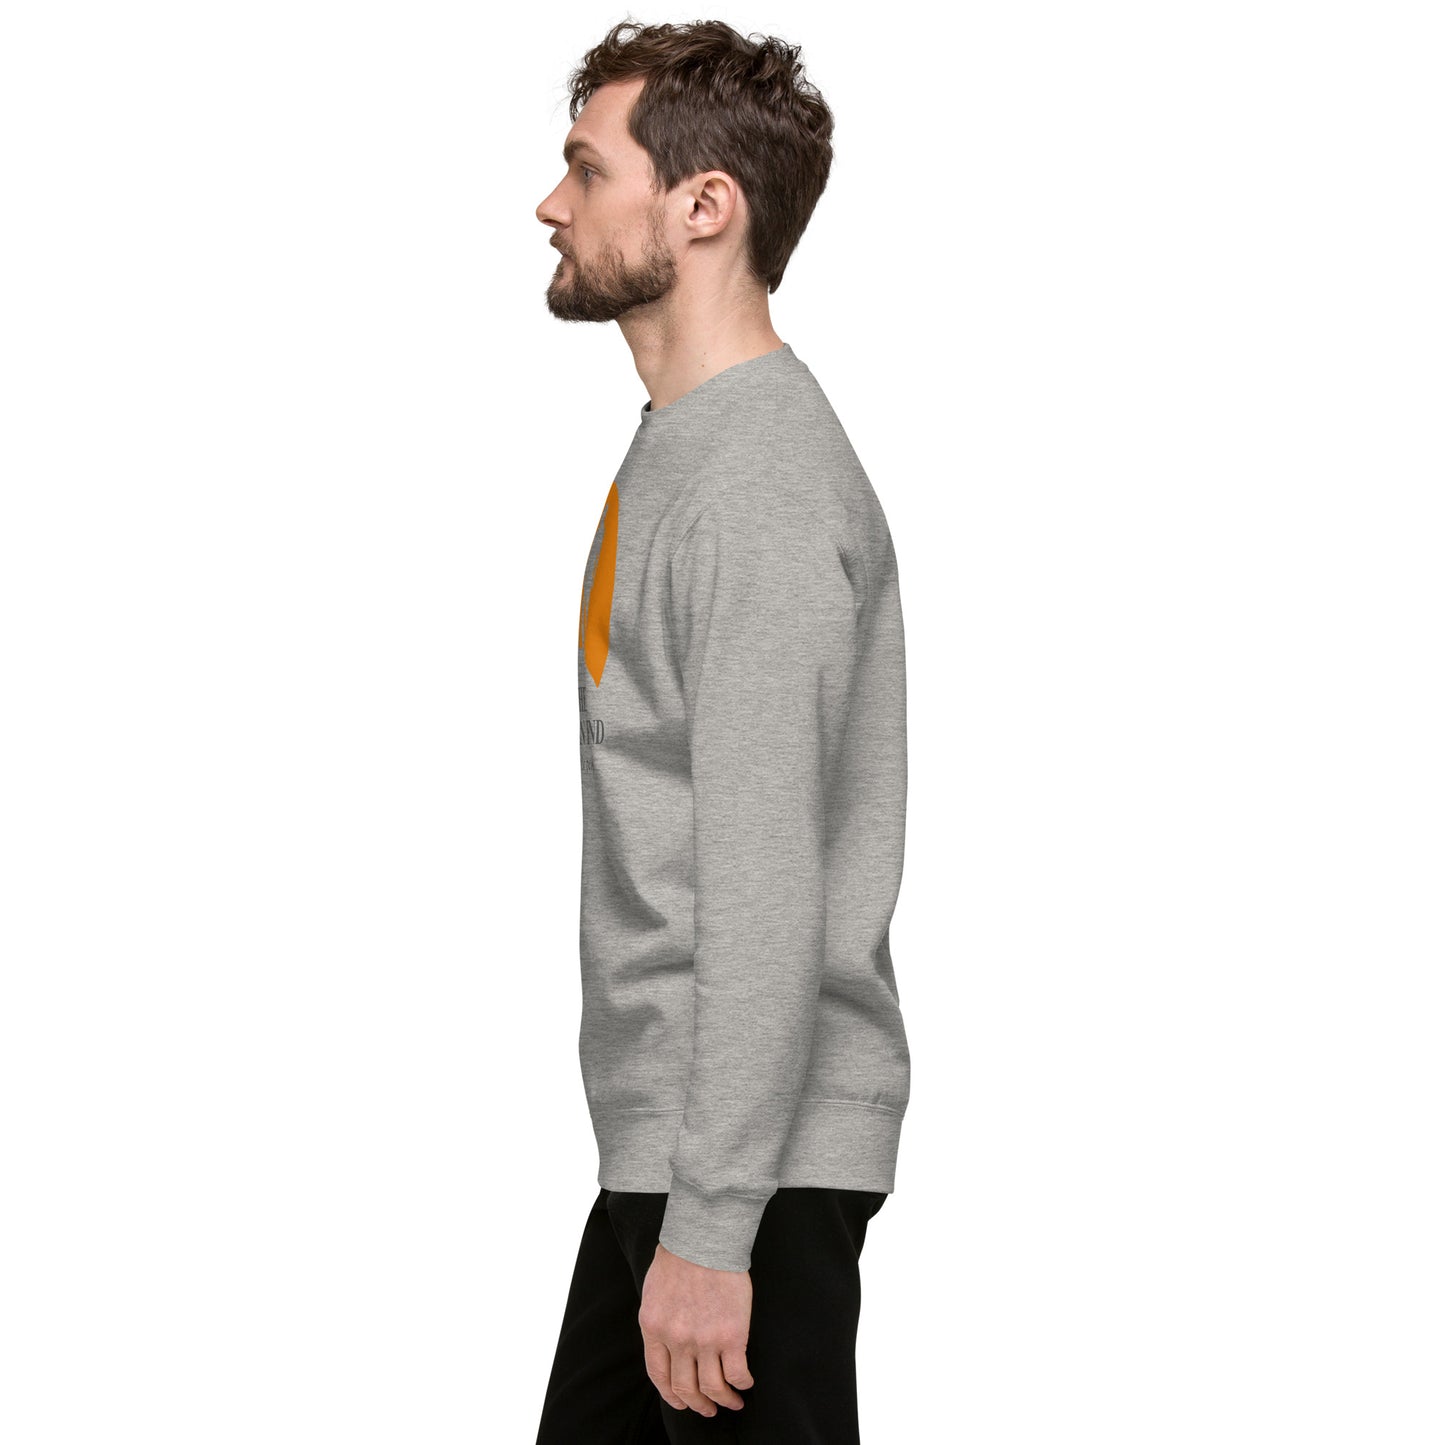 The Human Fund Unisex Premium Sweatshirt